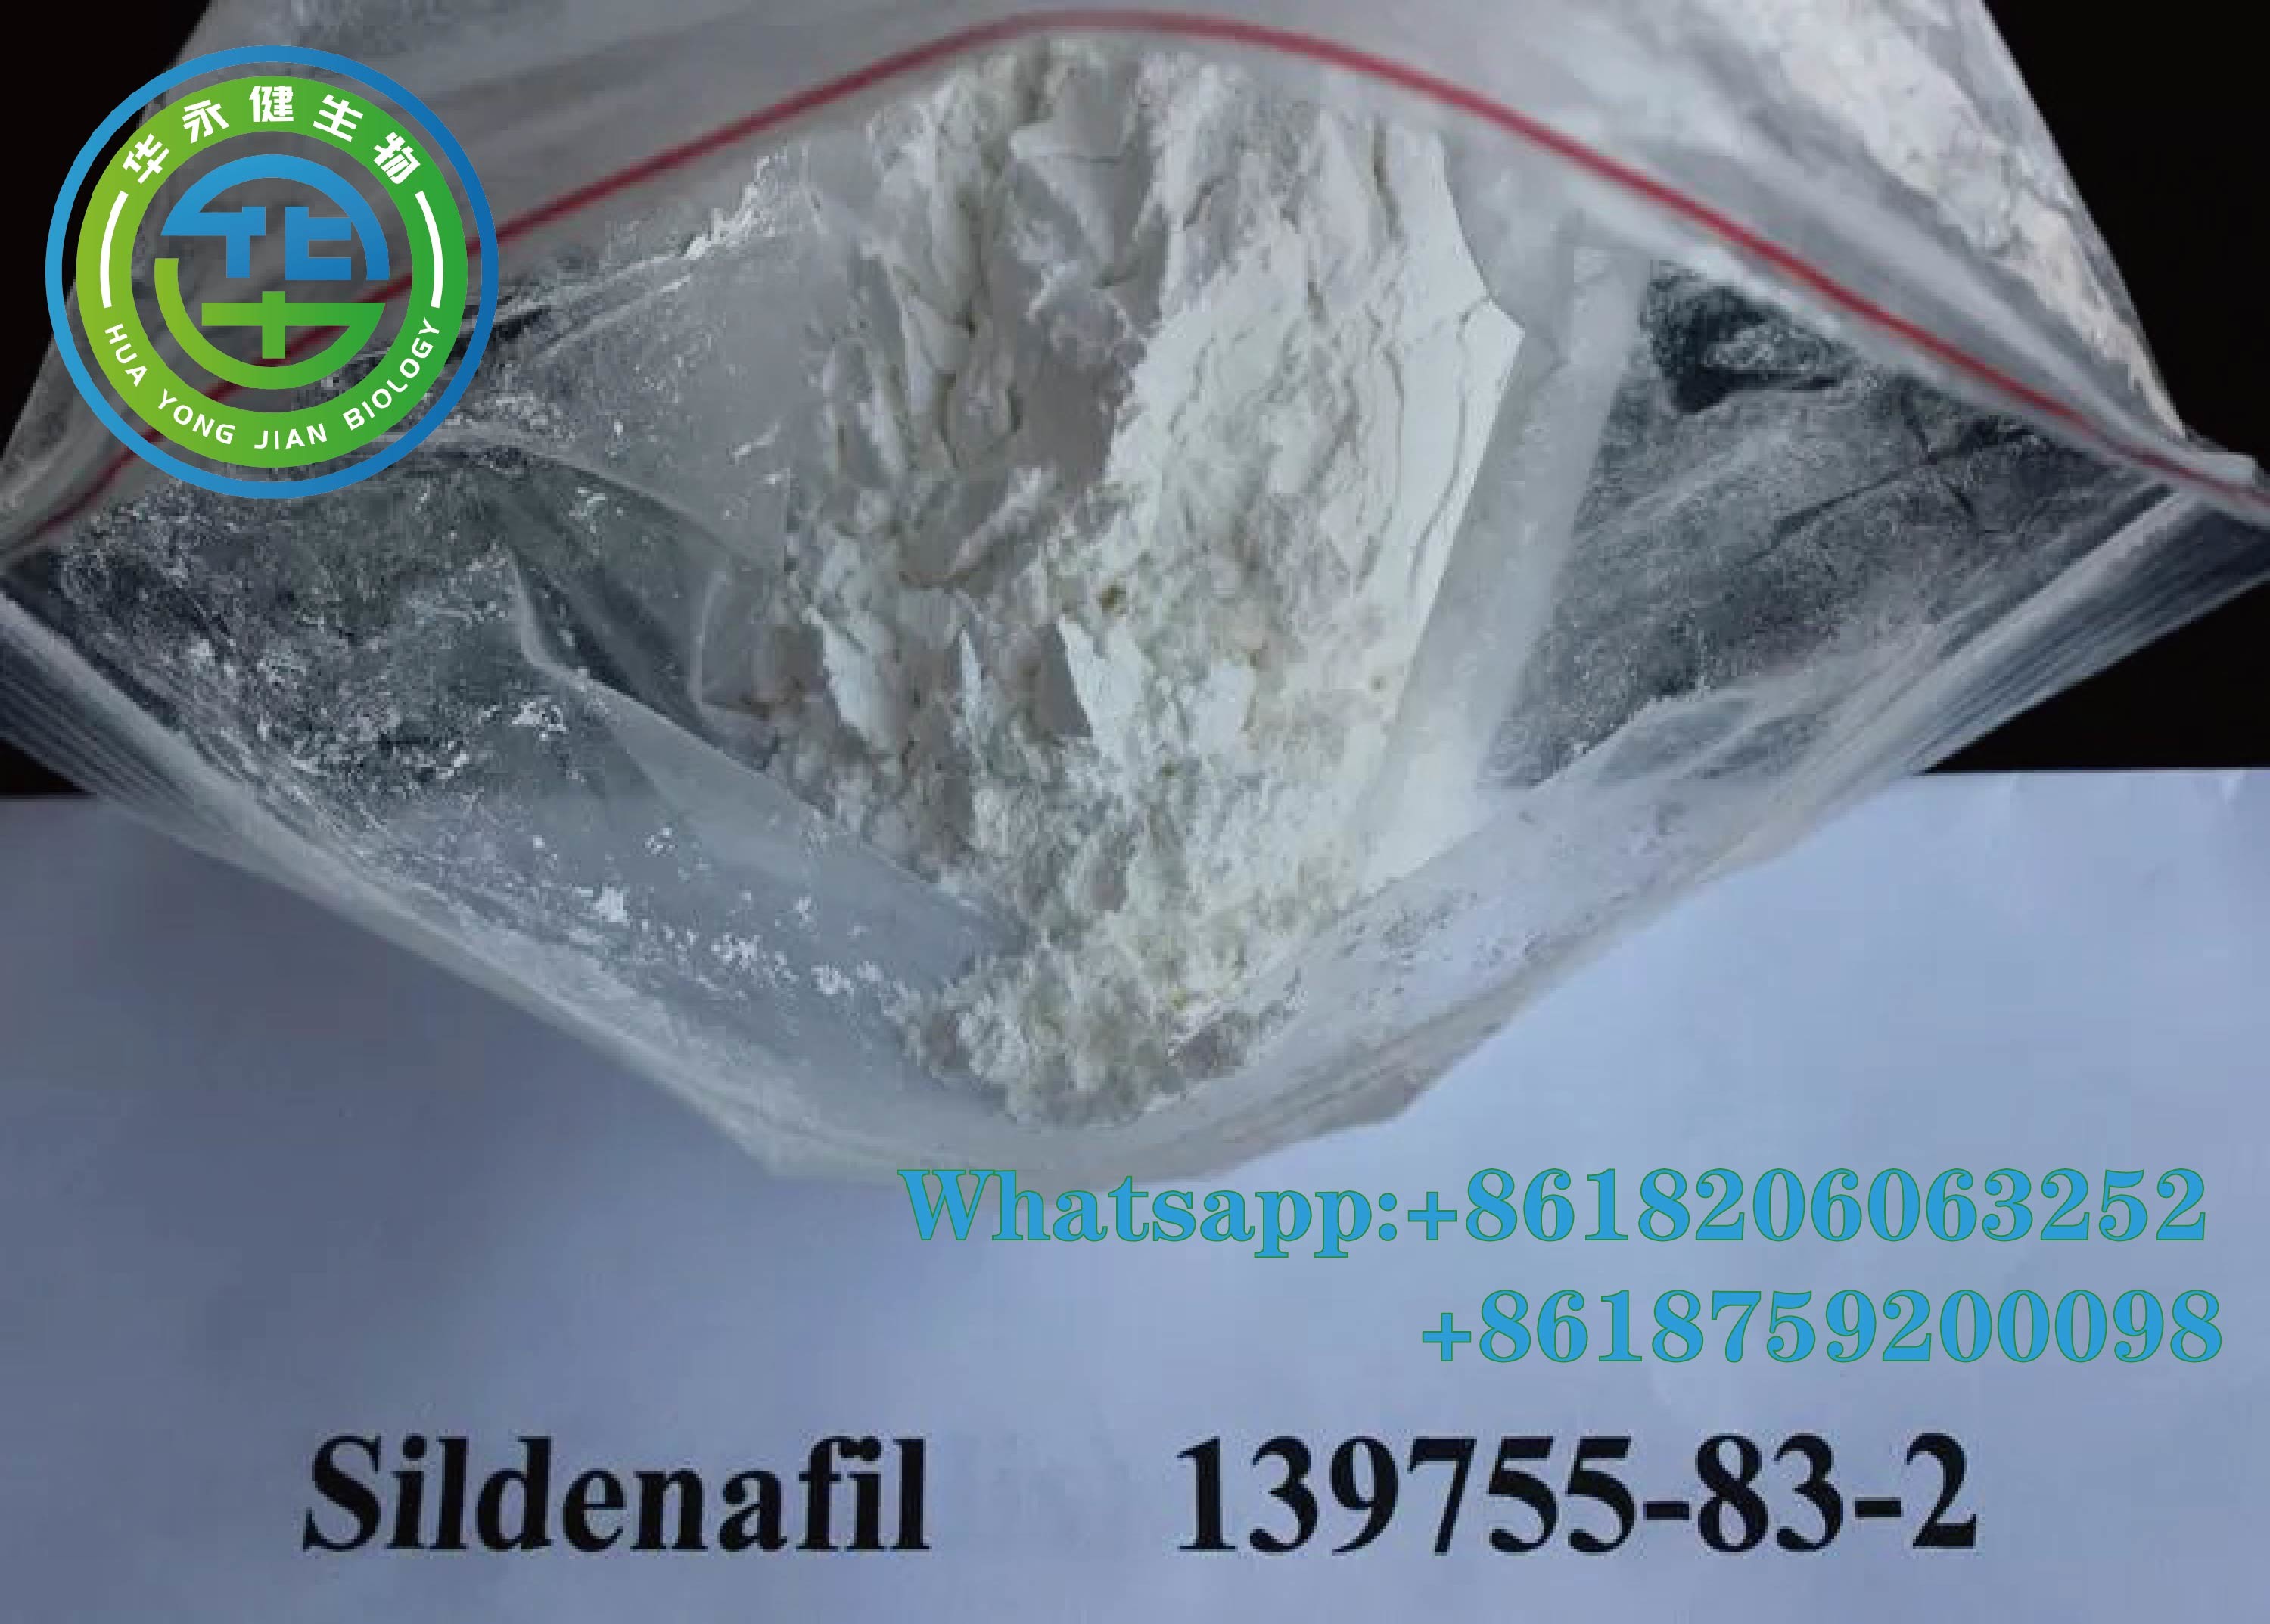 Wholesale Erectile Dysfunction Sexual Enhancement Powder Sildenafil Vardenafil Viagra 171599 83 0 from china suppliers